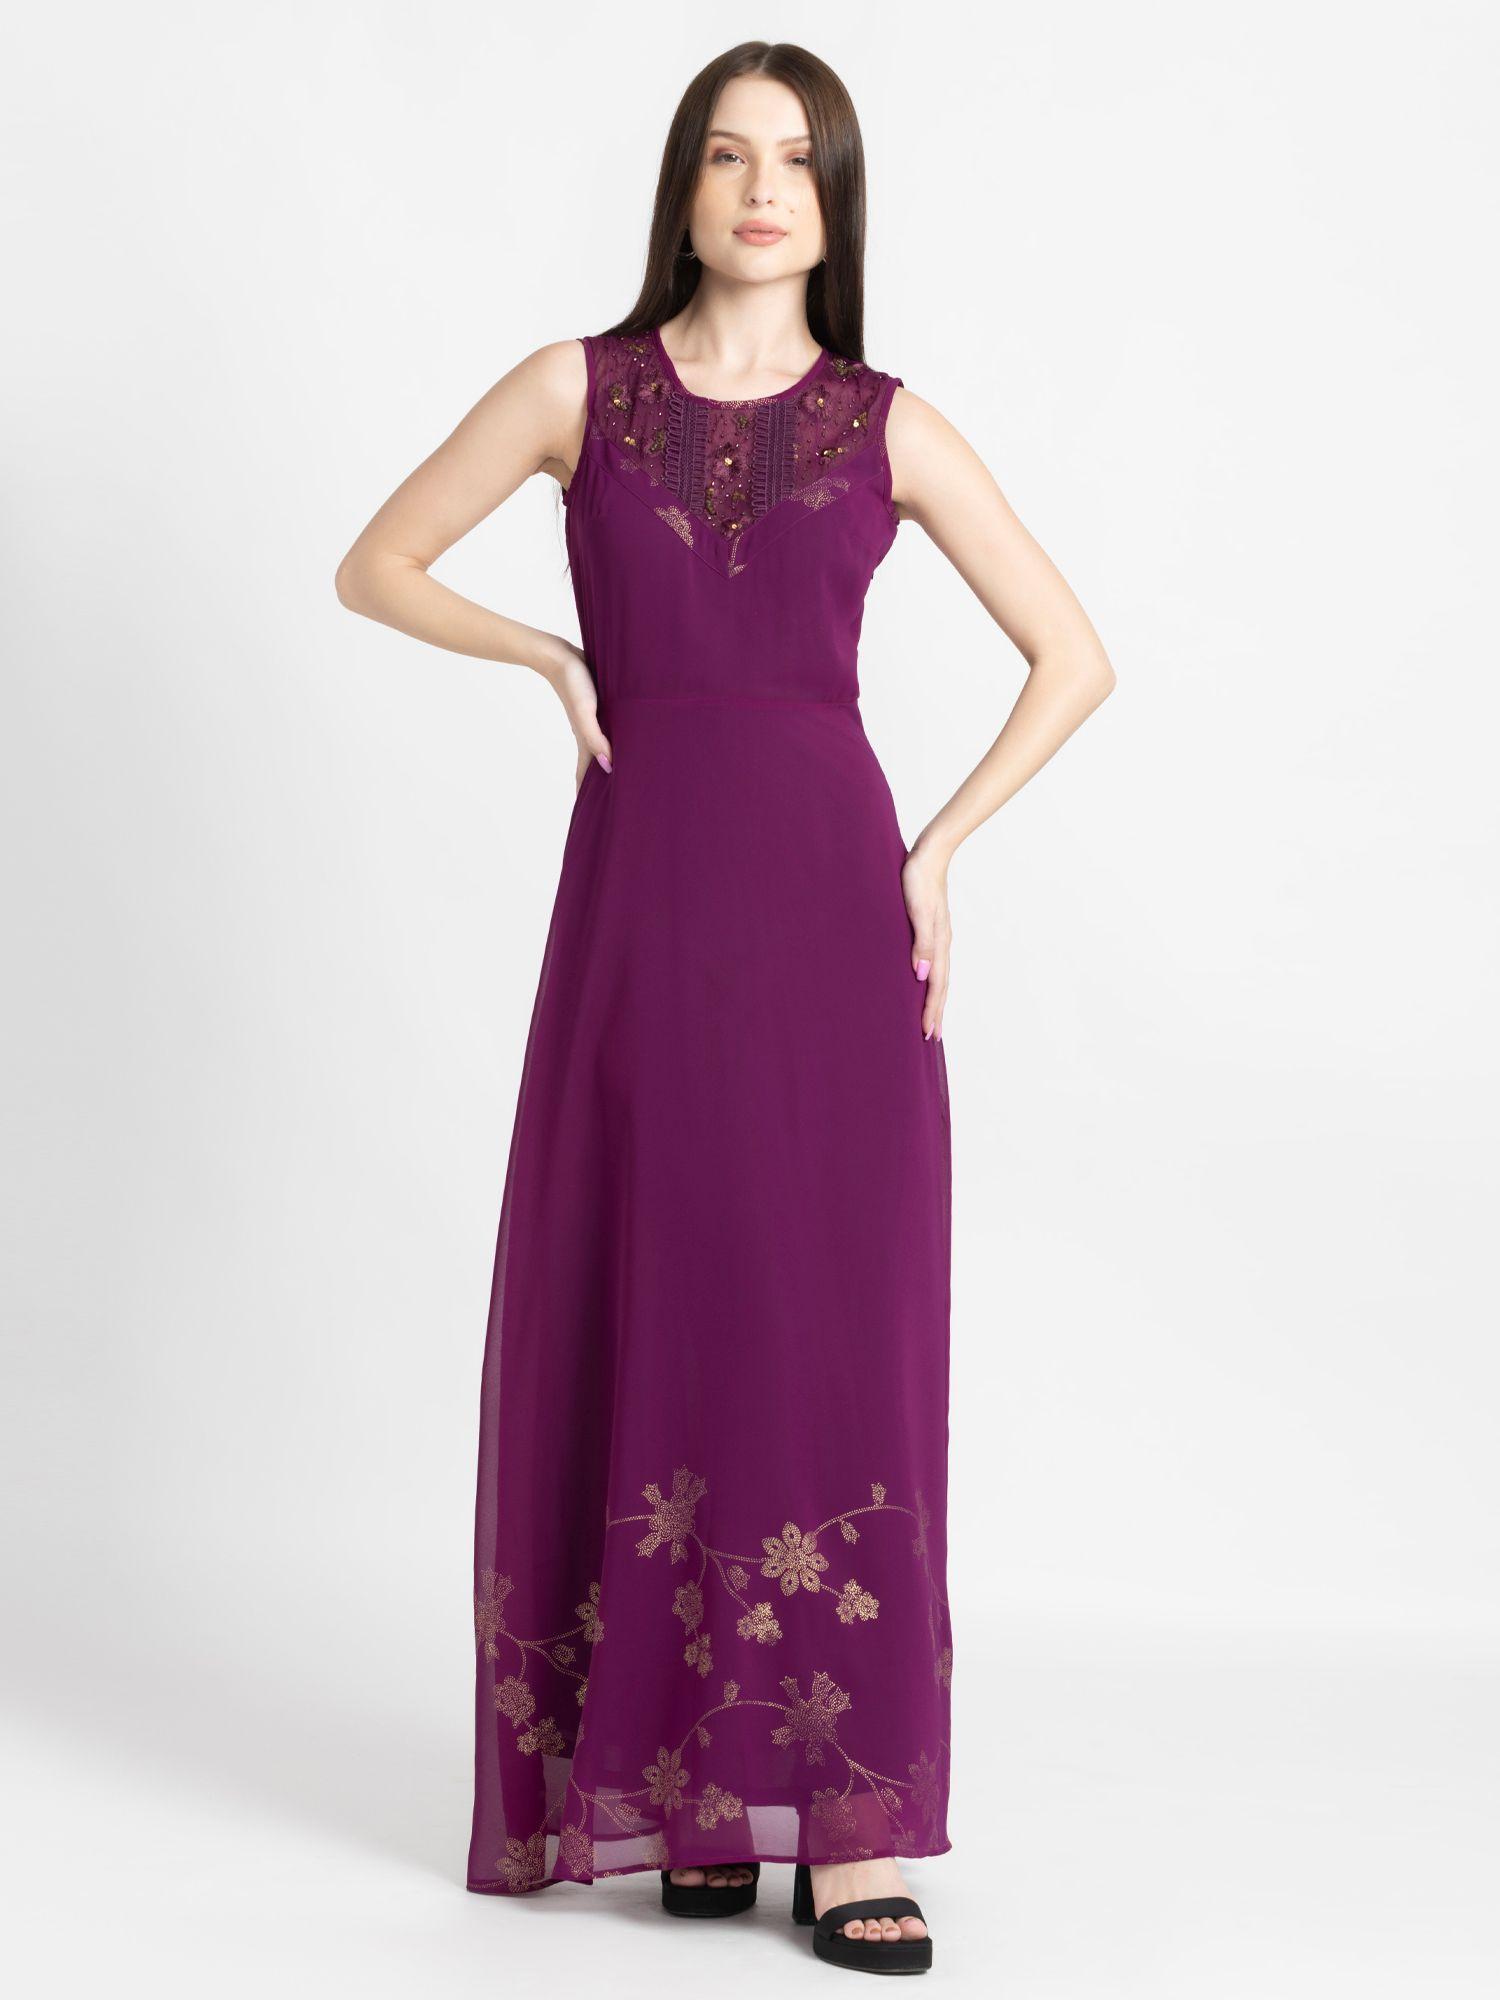 round neck purple embellished sleeveless party dress for women